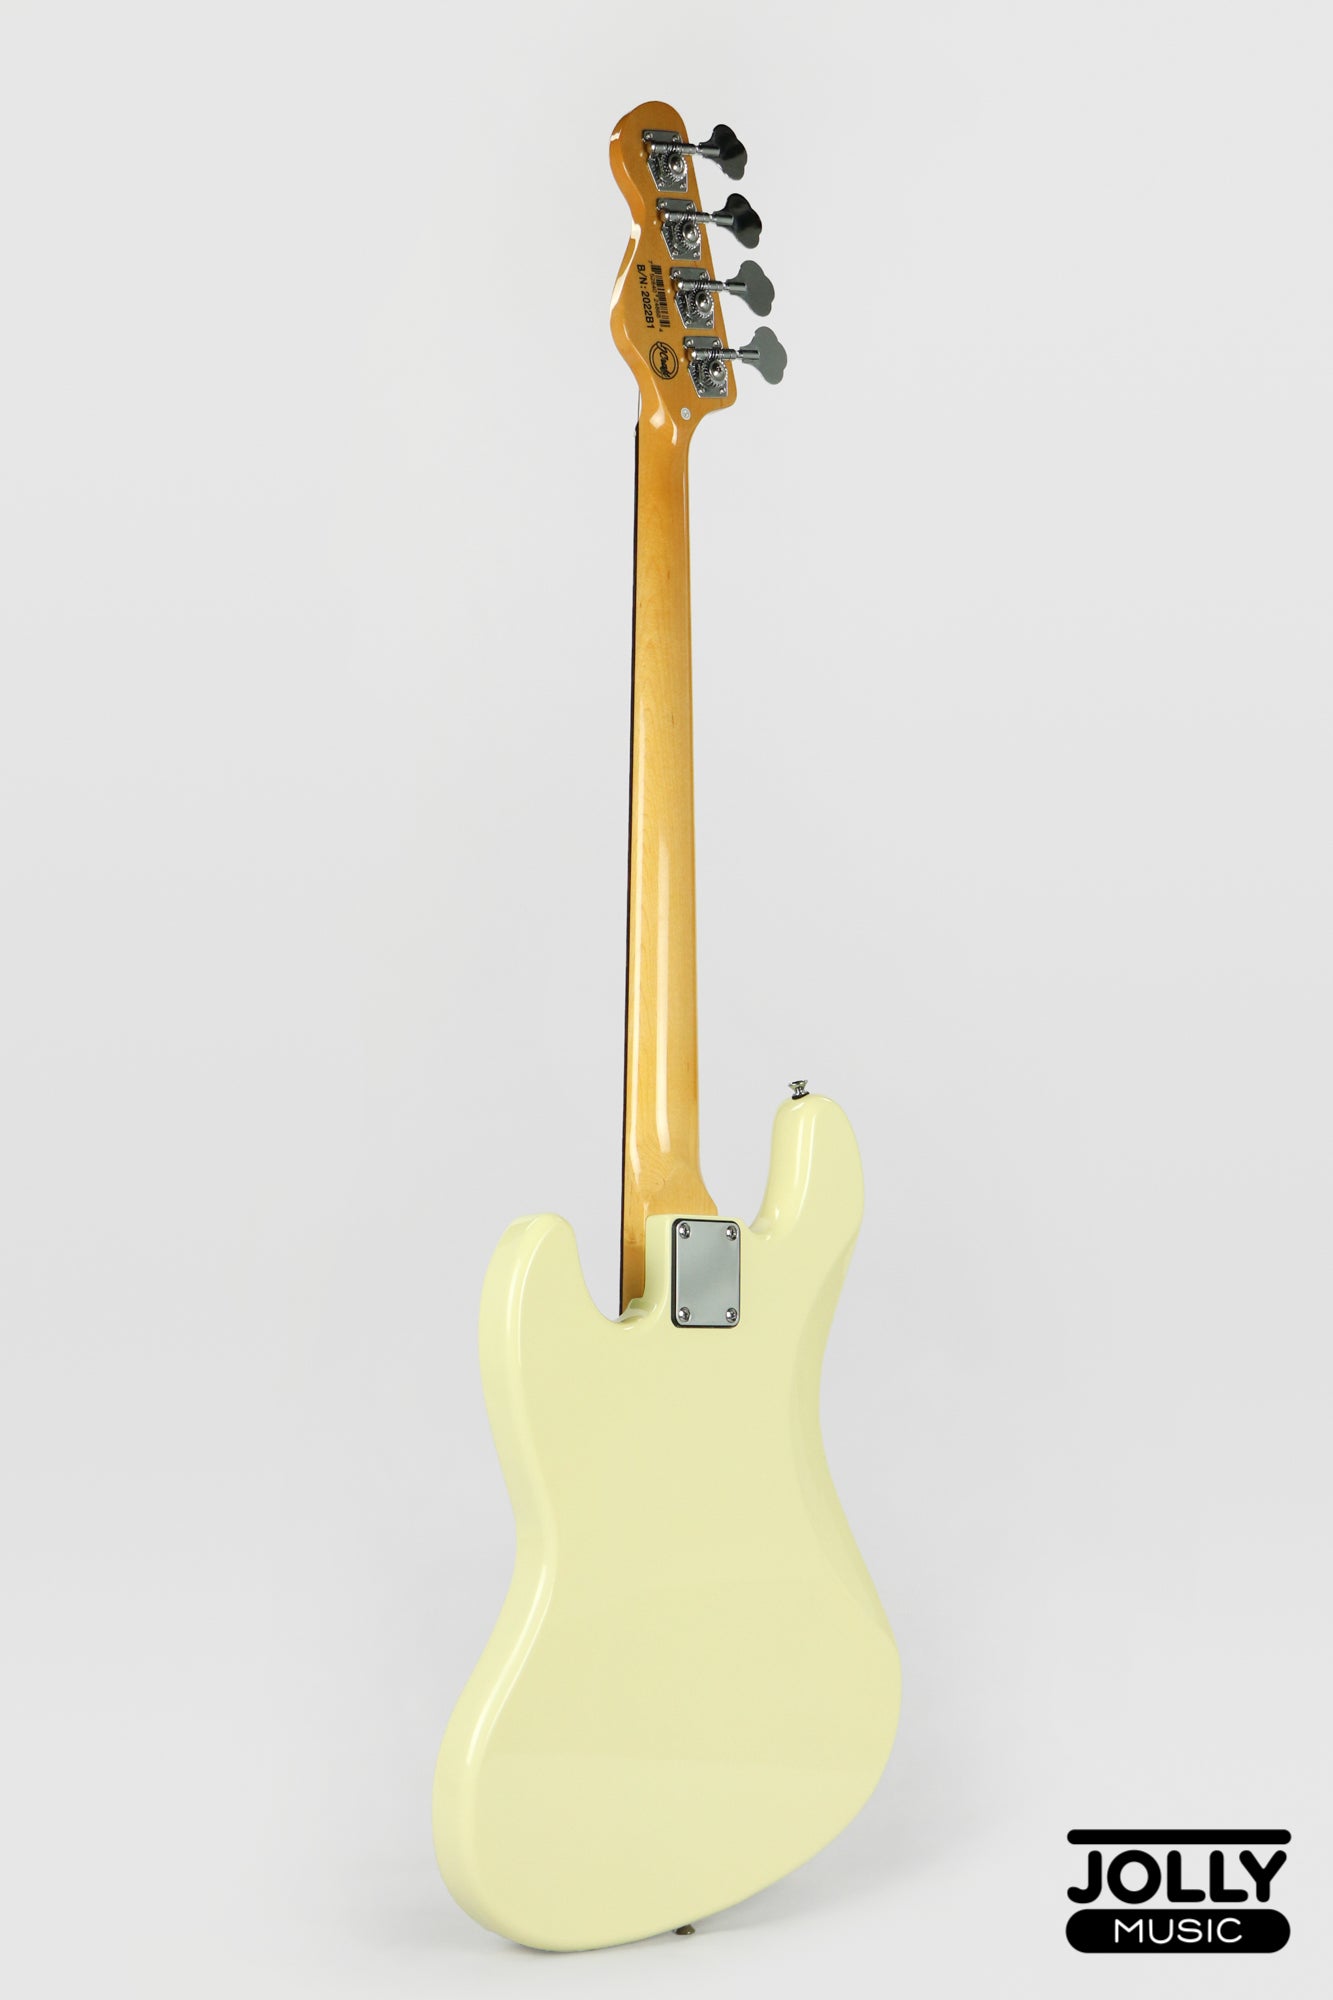 JCraft PB-3V 4-String Bass Guitar - Vintage White